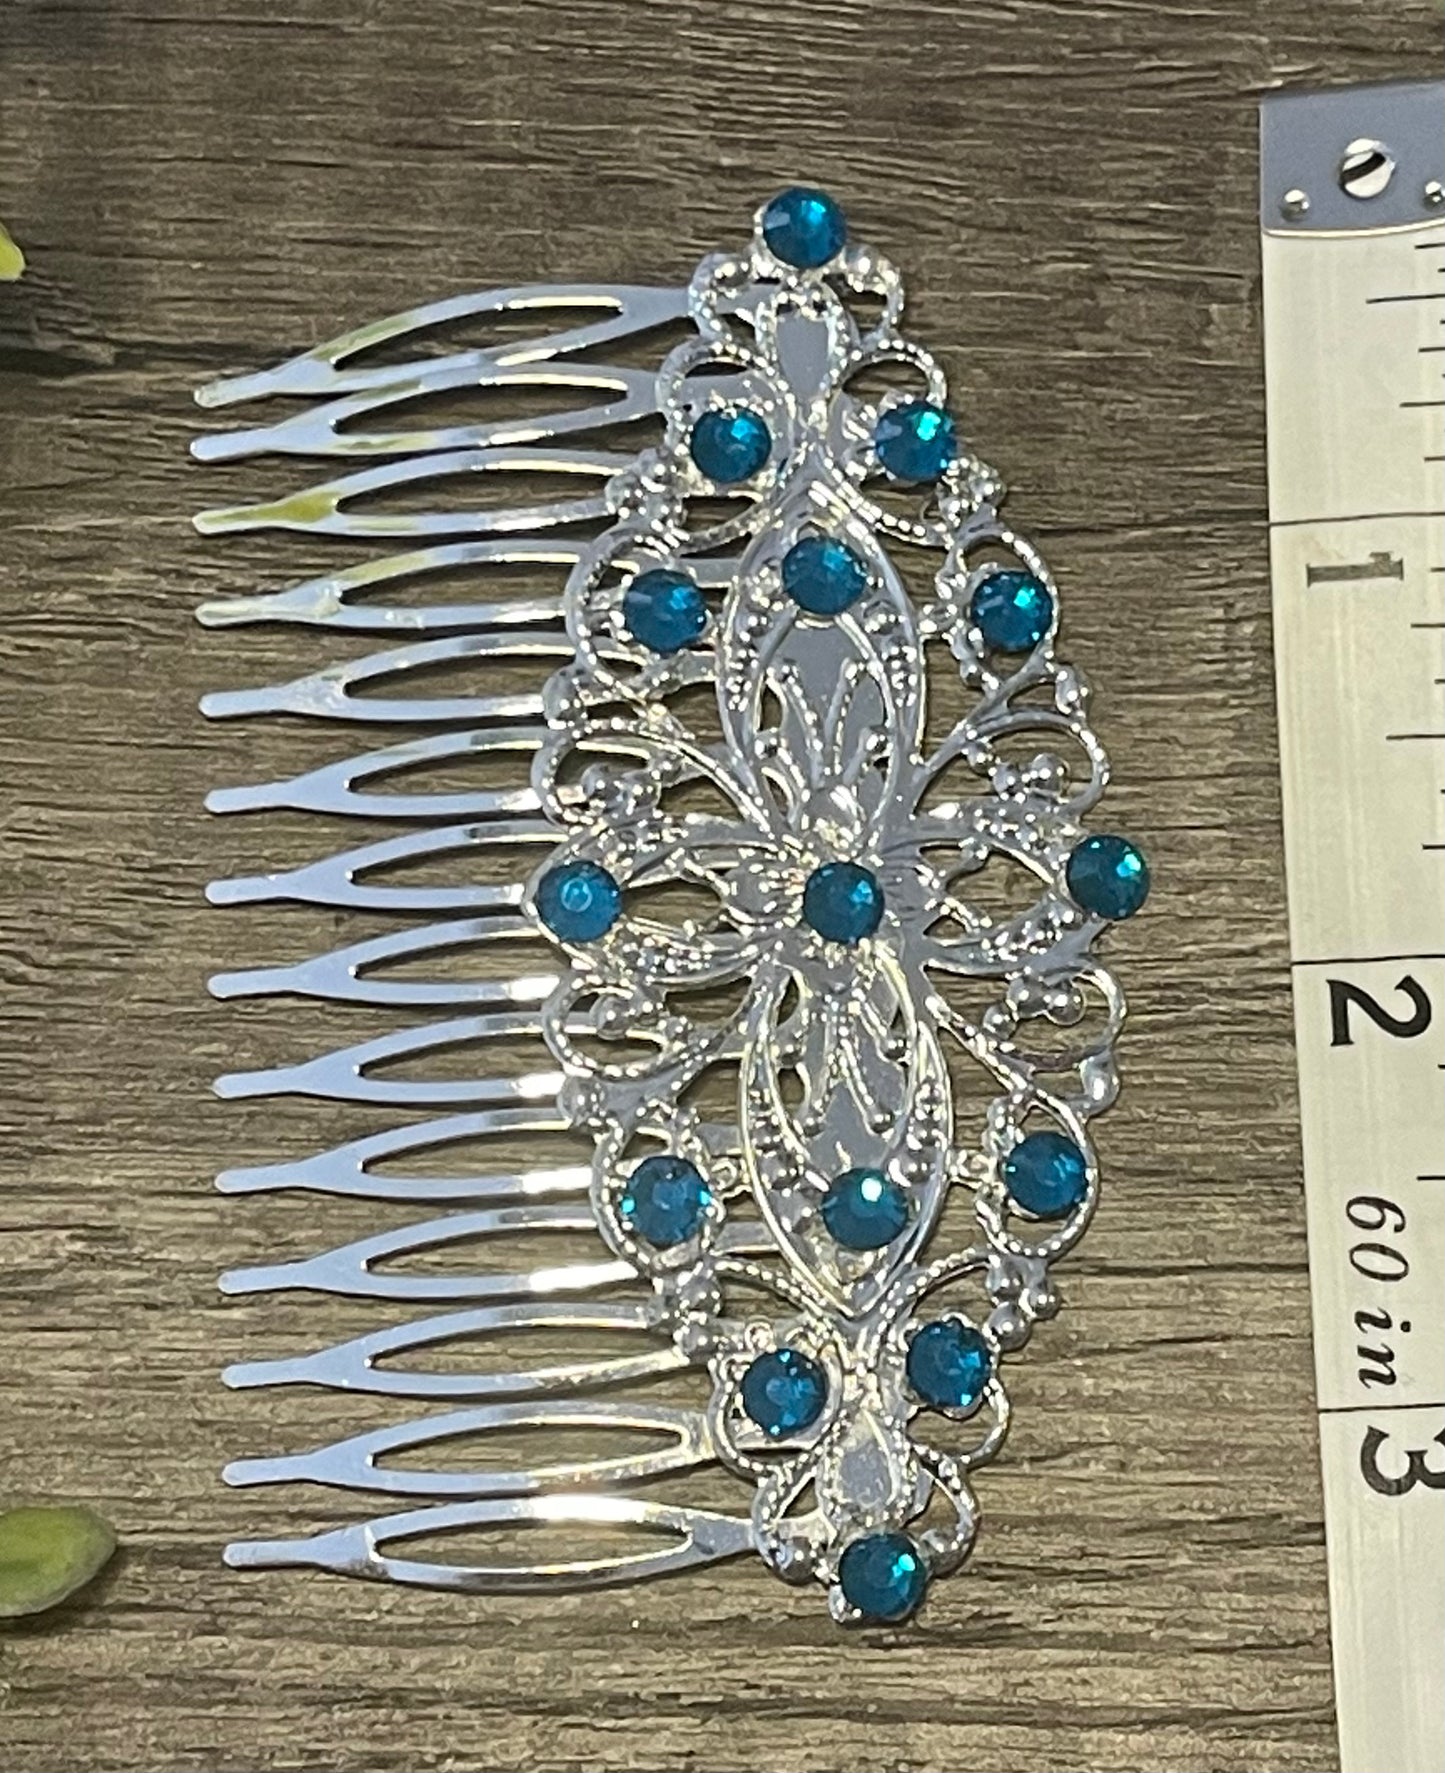 Sapphire teal crystal rhinestone Comb on 3.5” silver Metal Hair Comb accessory Handmade Retro Bridal Prom